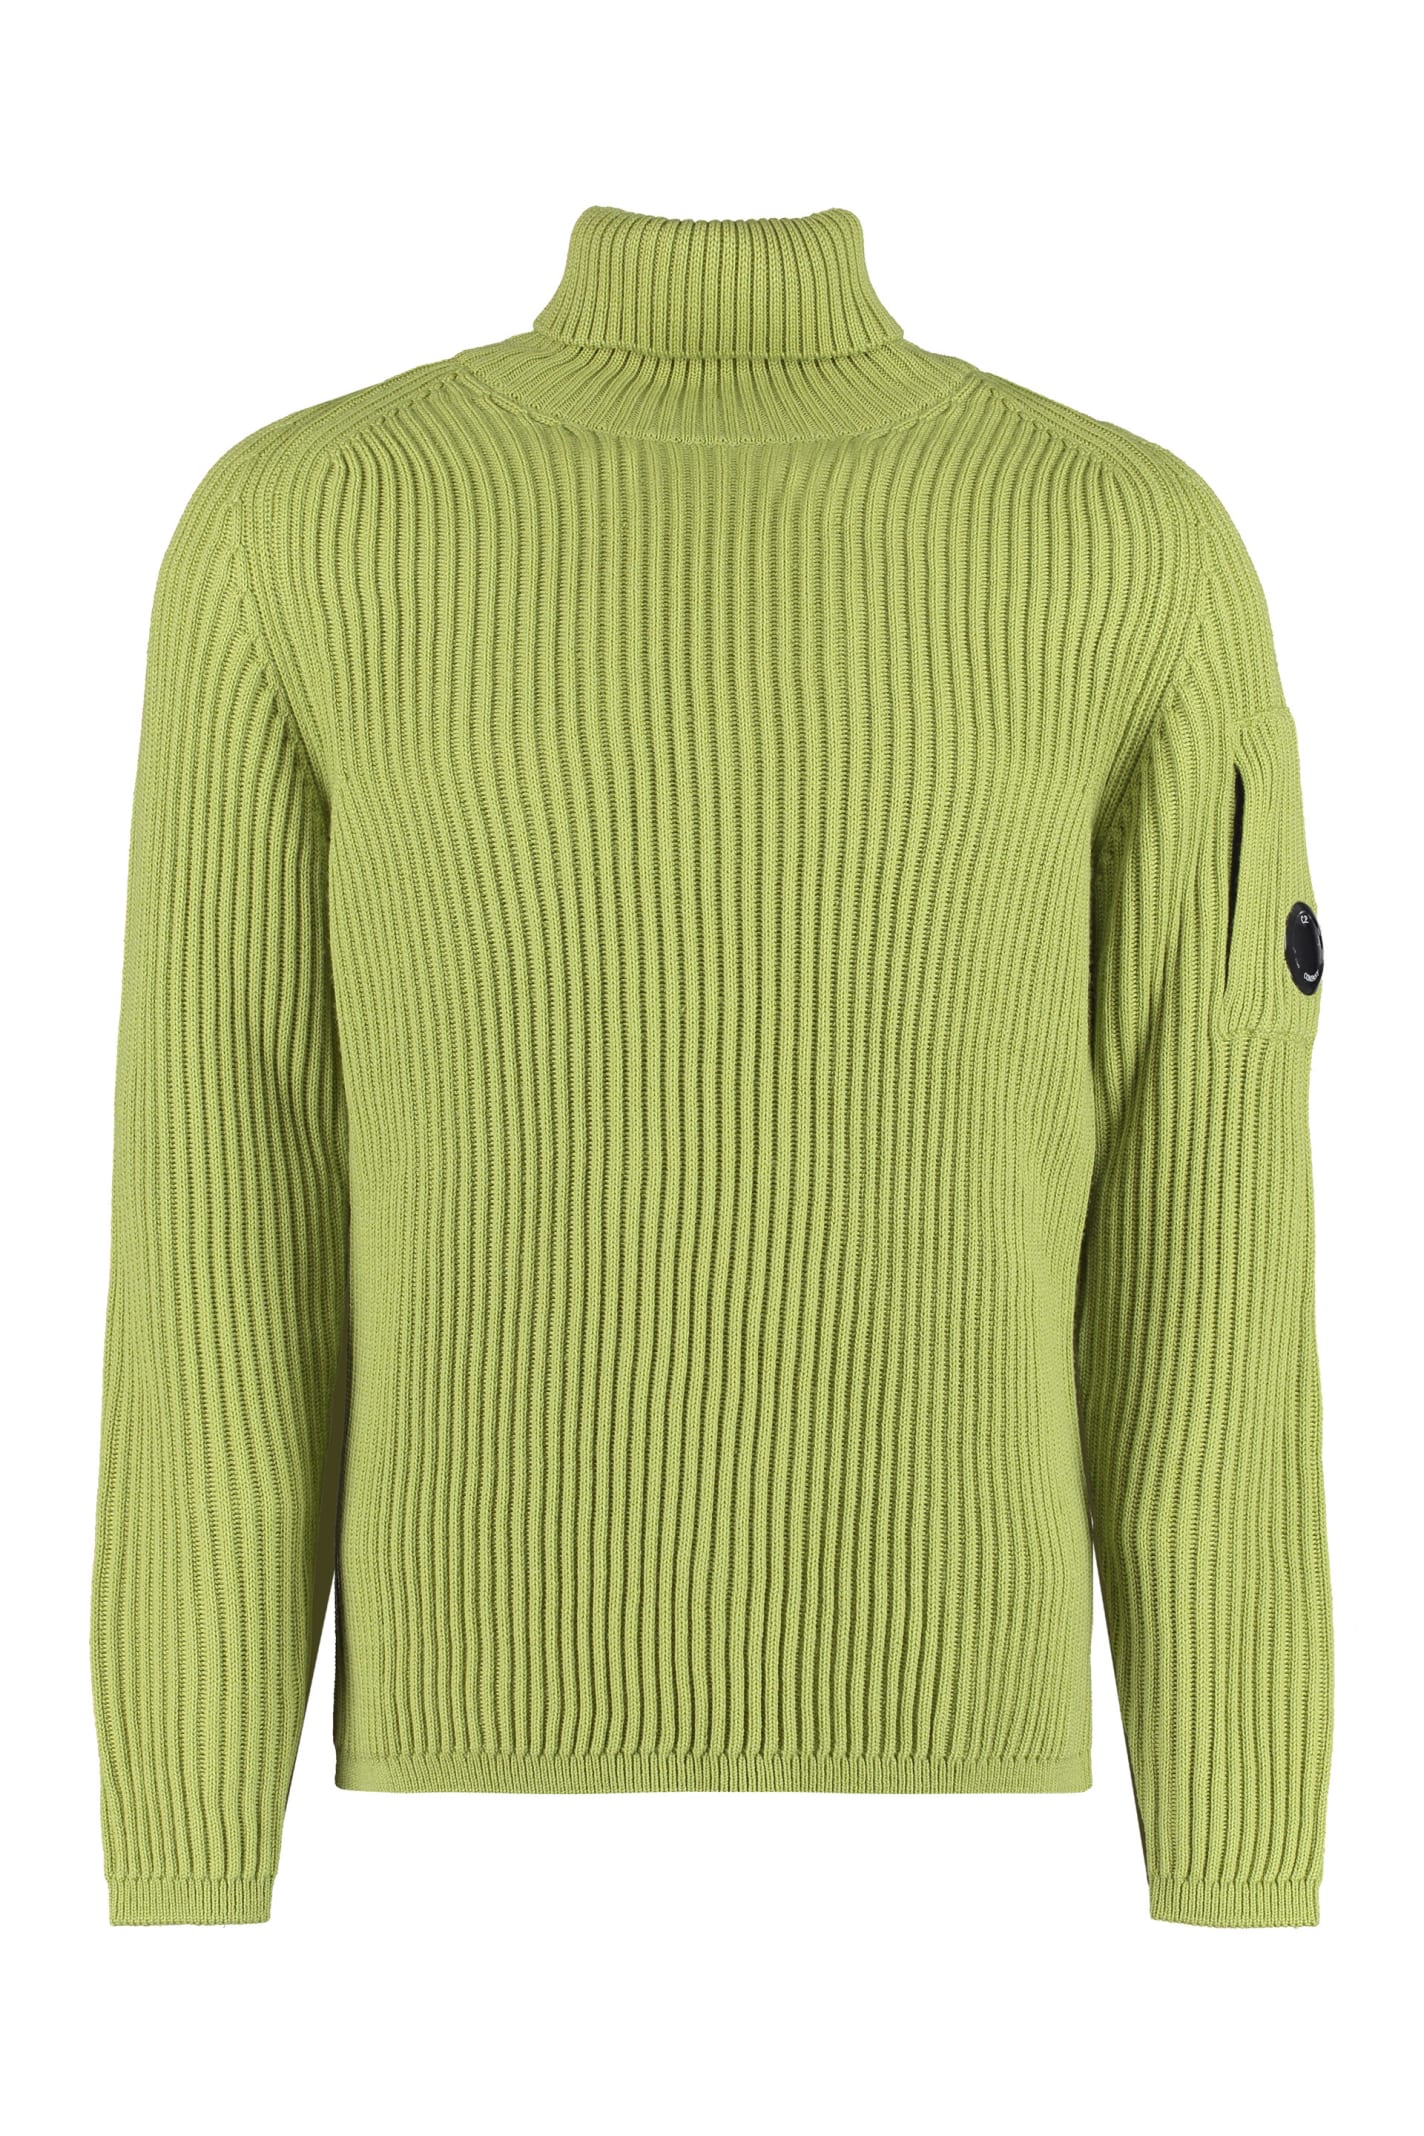 C.P. Company Wool Blend Turtleneck Sweater